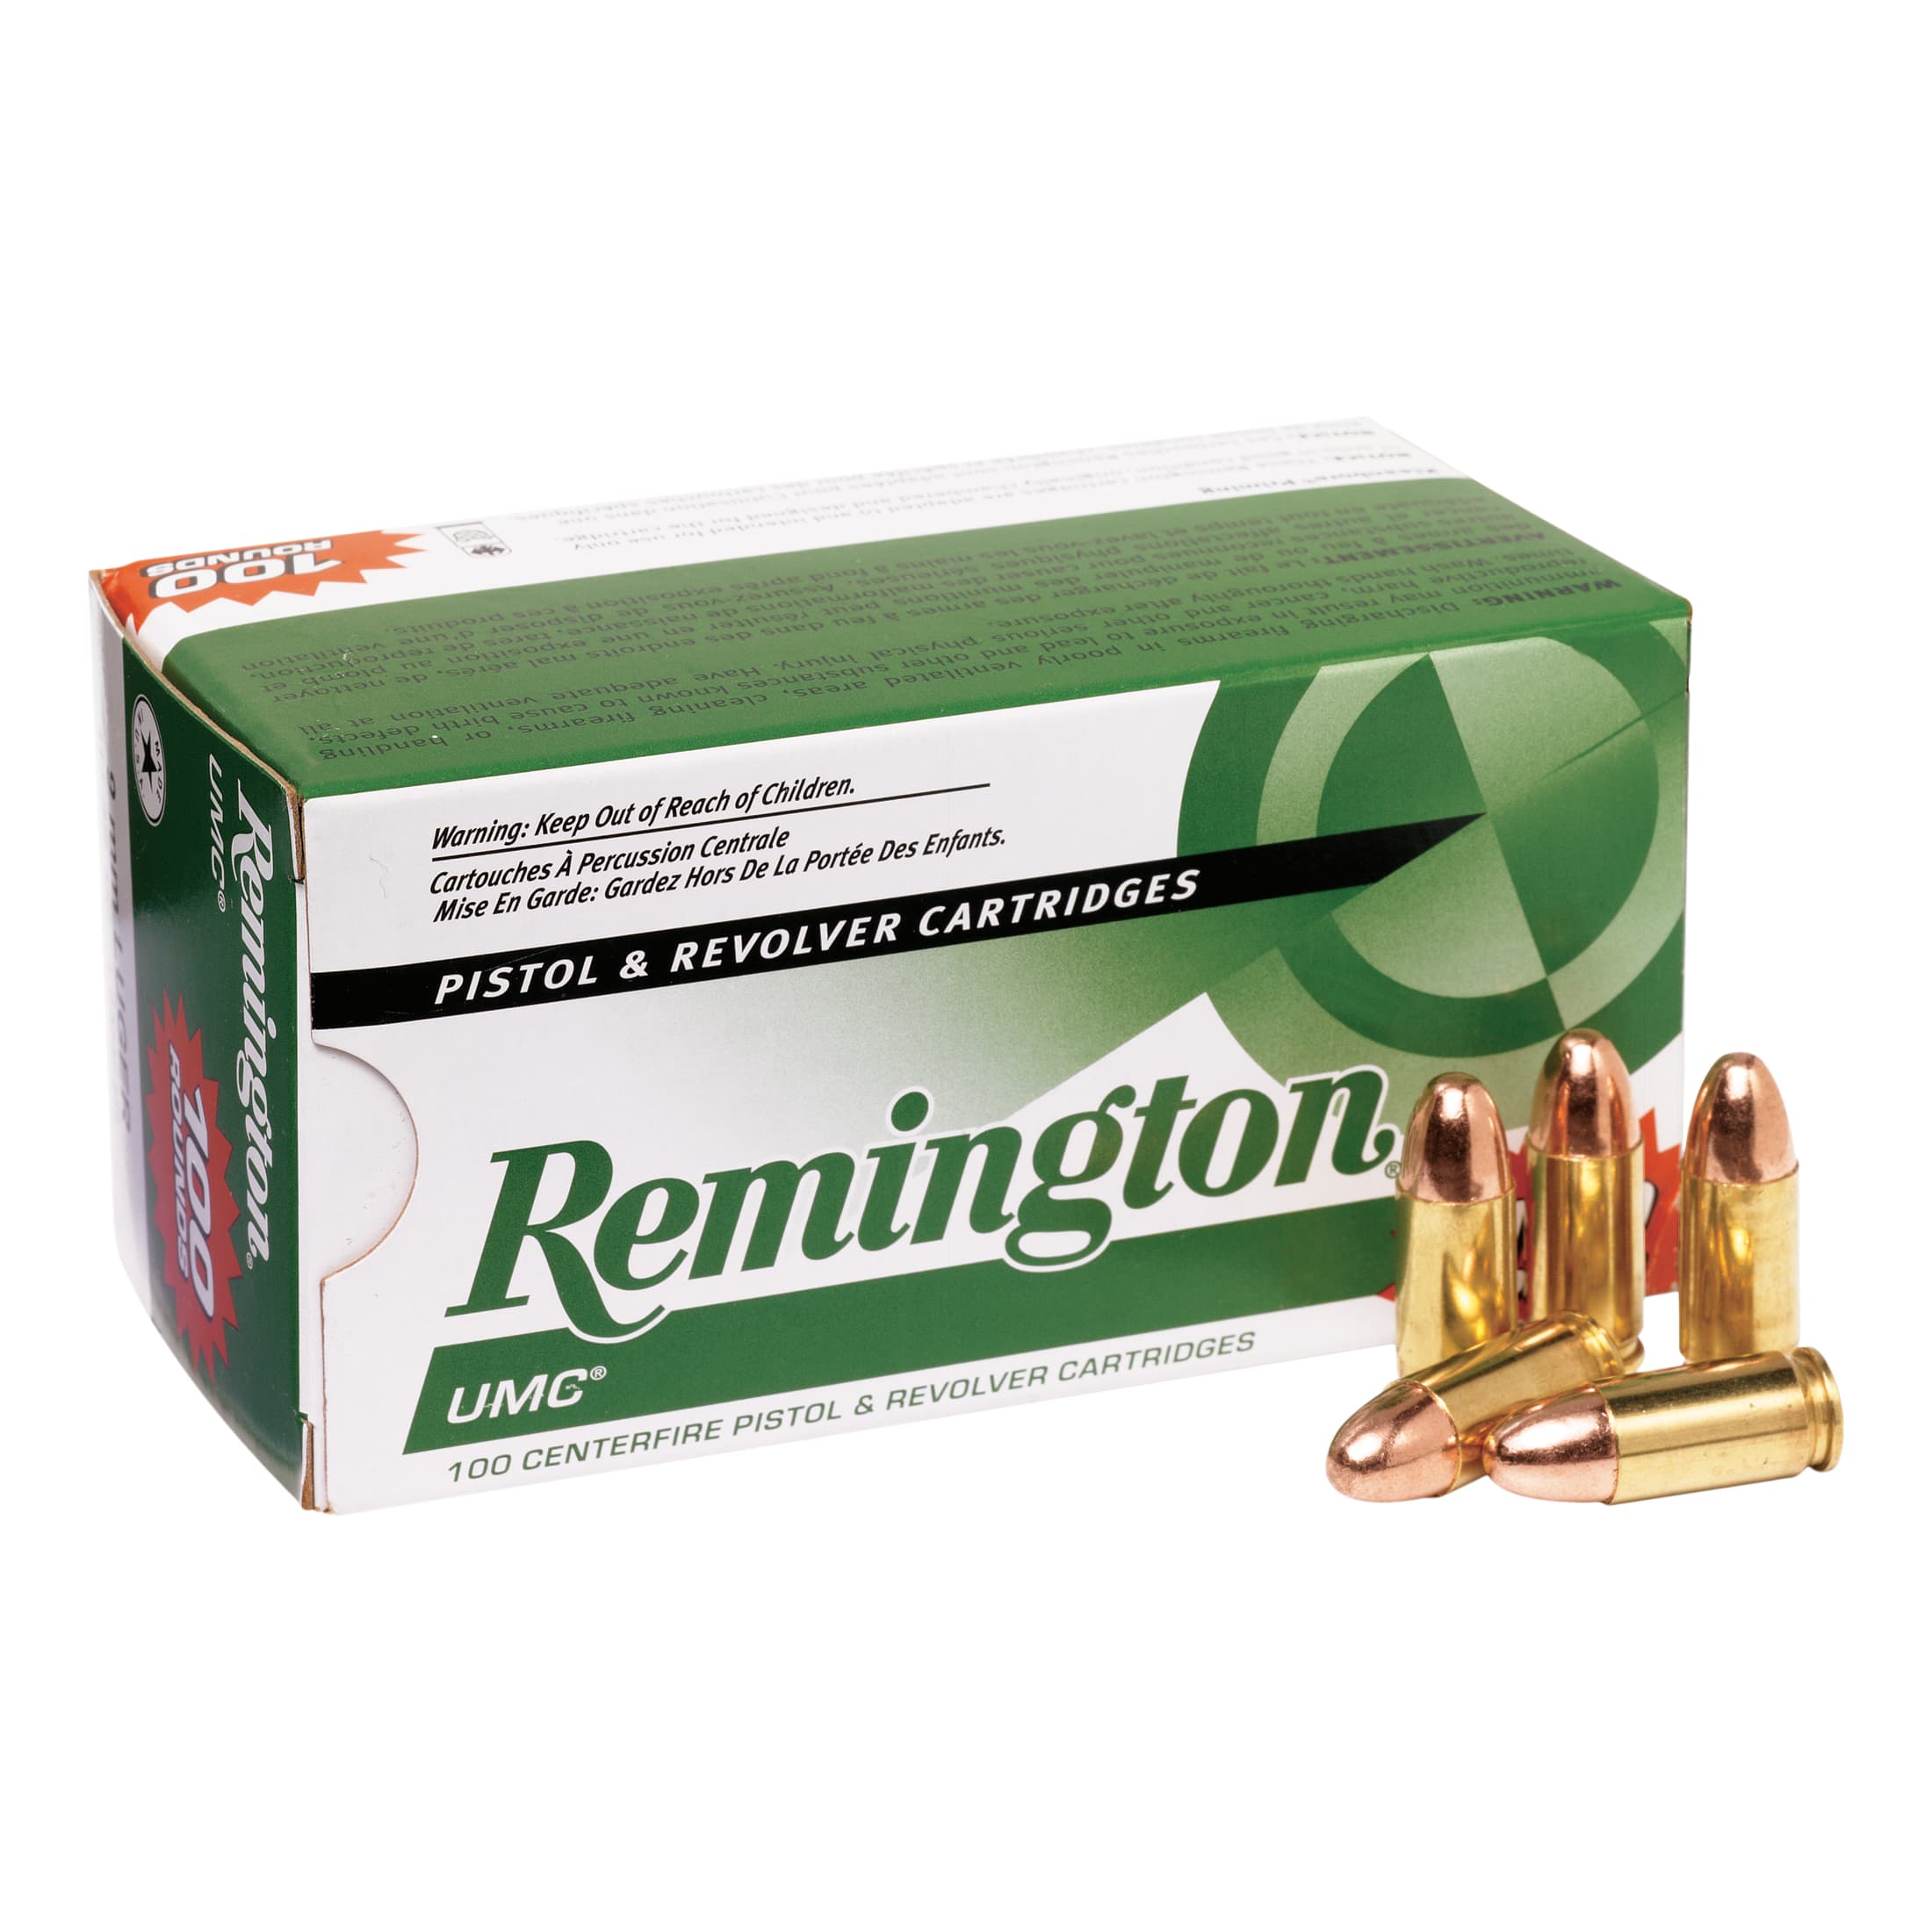 Remington UMC Pistol Ammunition - 9mm Luger